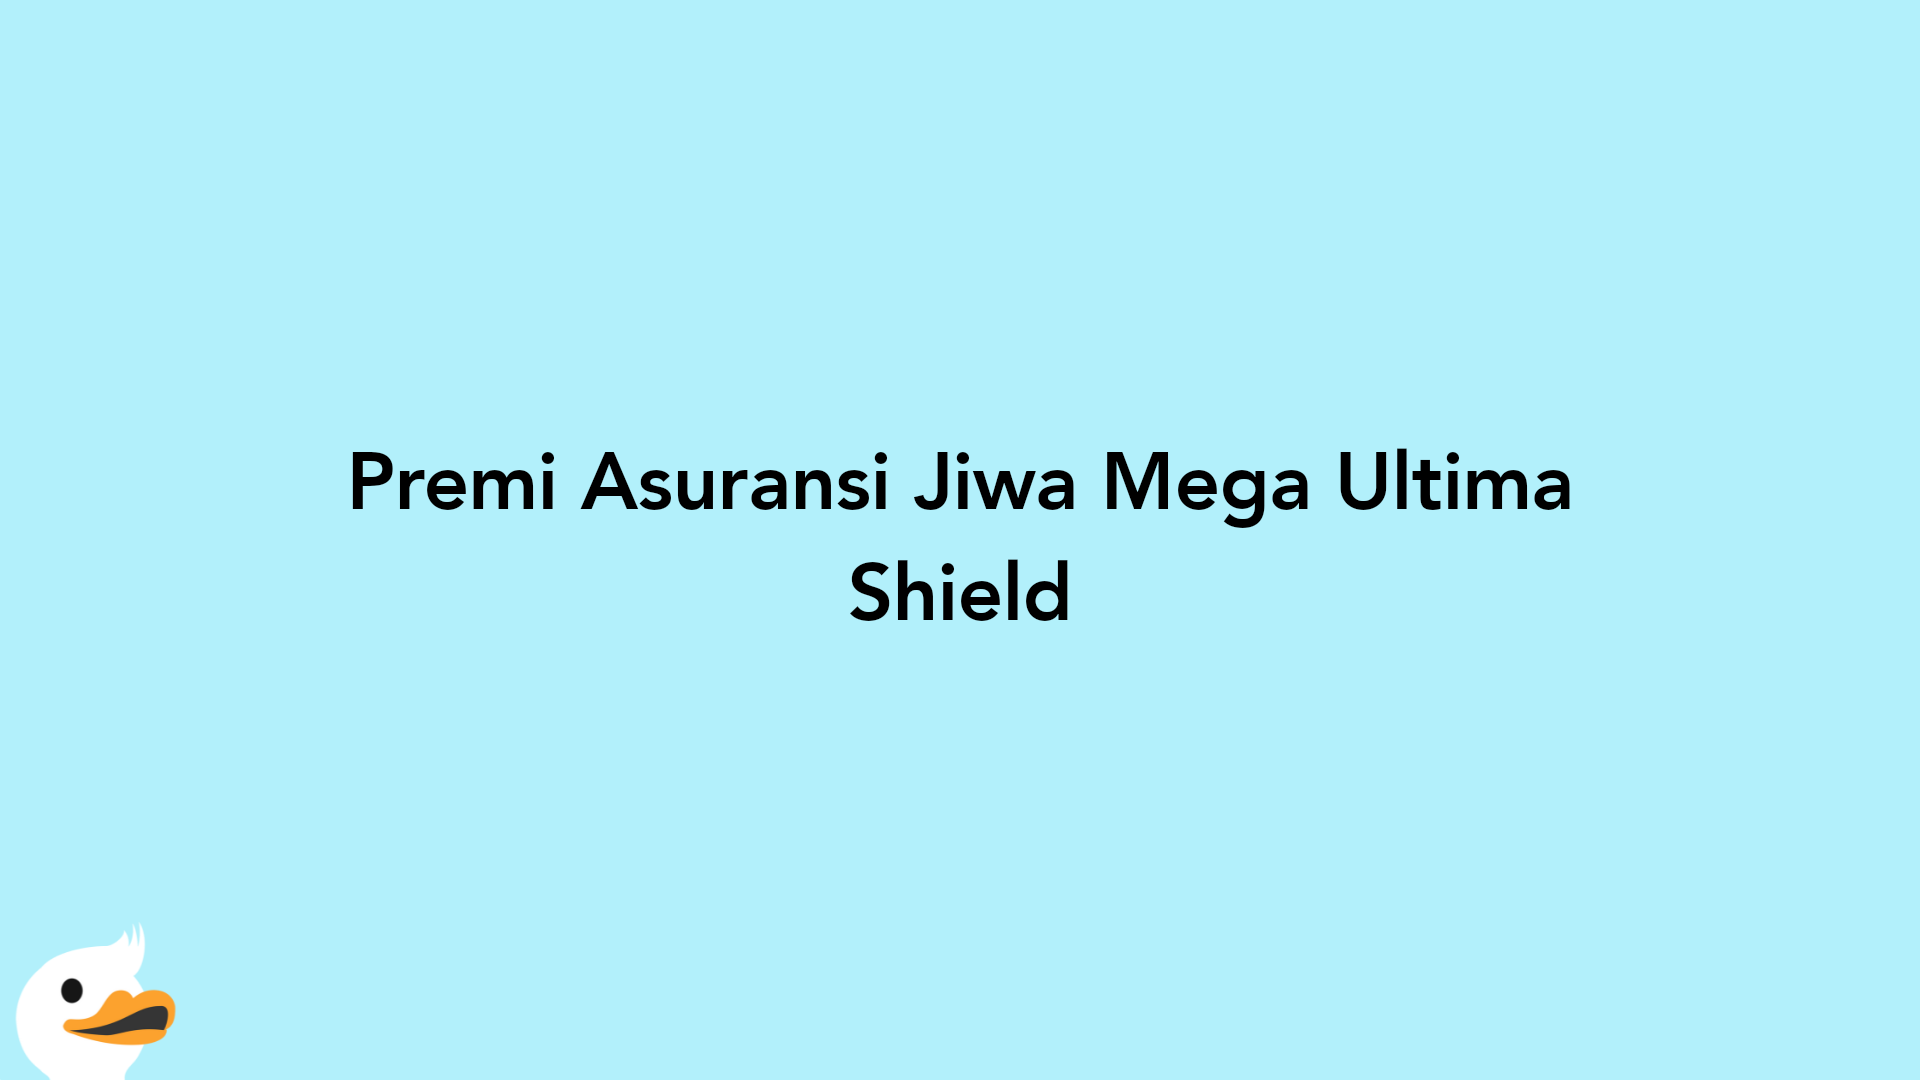 Premi Asuransi Jiwa Mega Ultima Shield